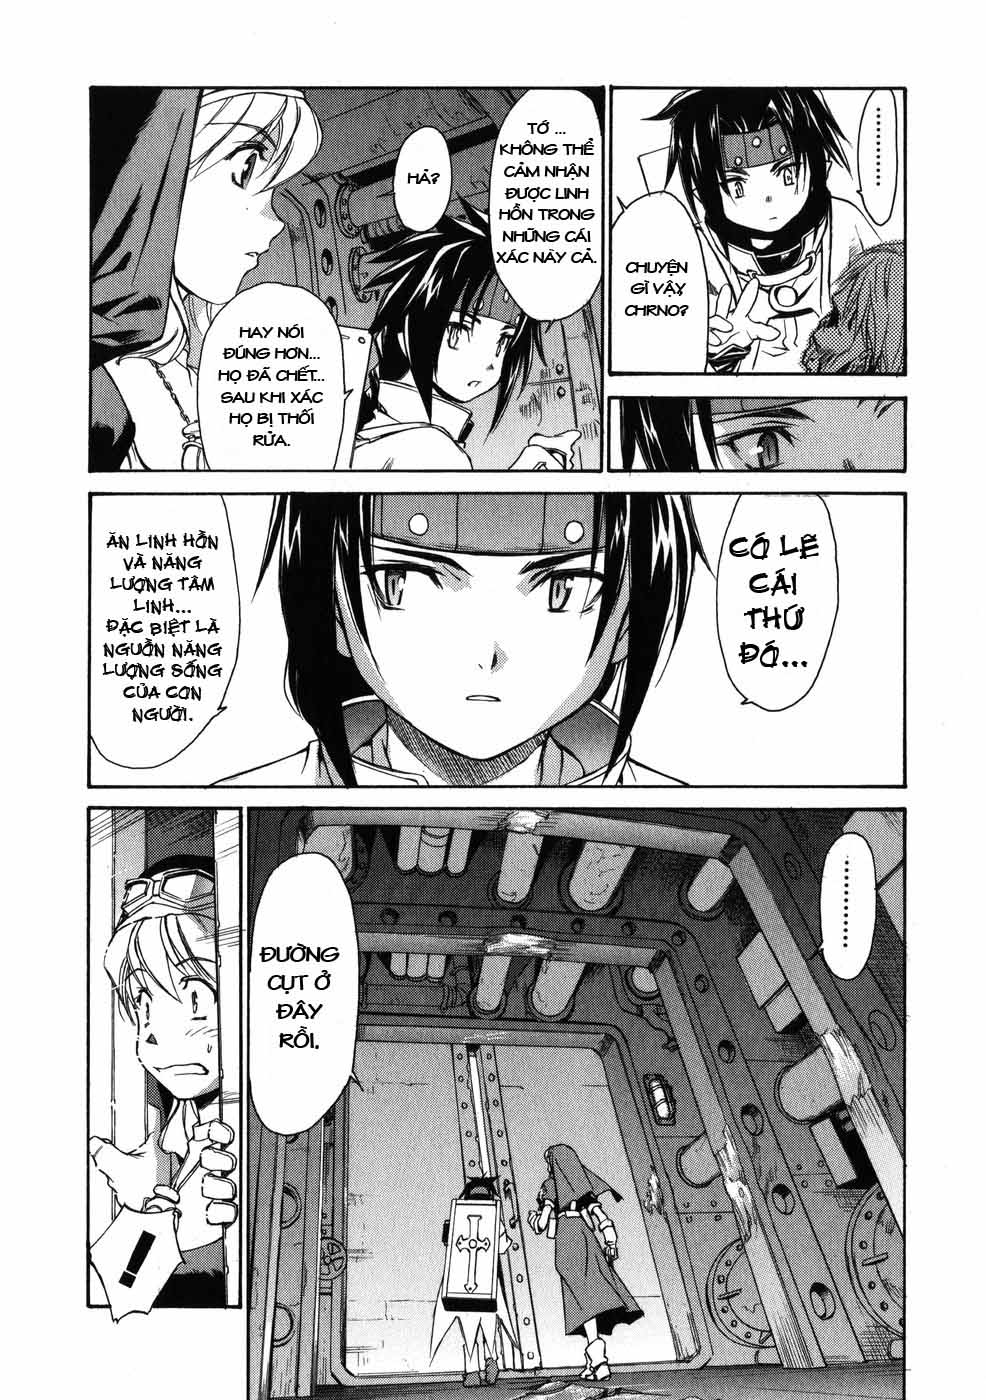 [Manga] Chrono Crusade (Đọc online tại SSF) - Page 2 CHRNO-CRUSADE-01-018